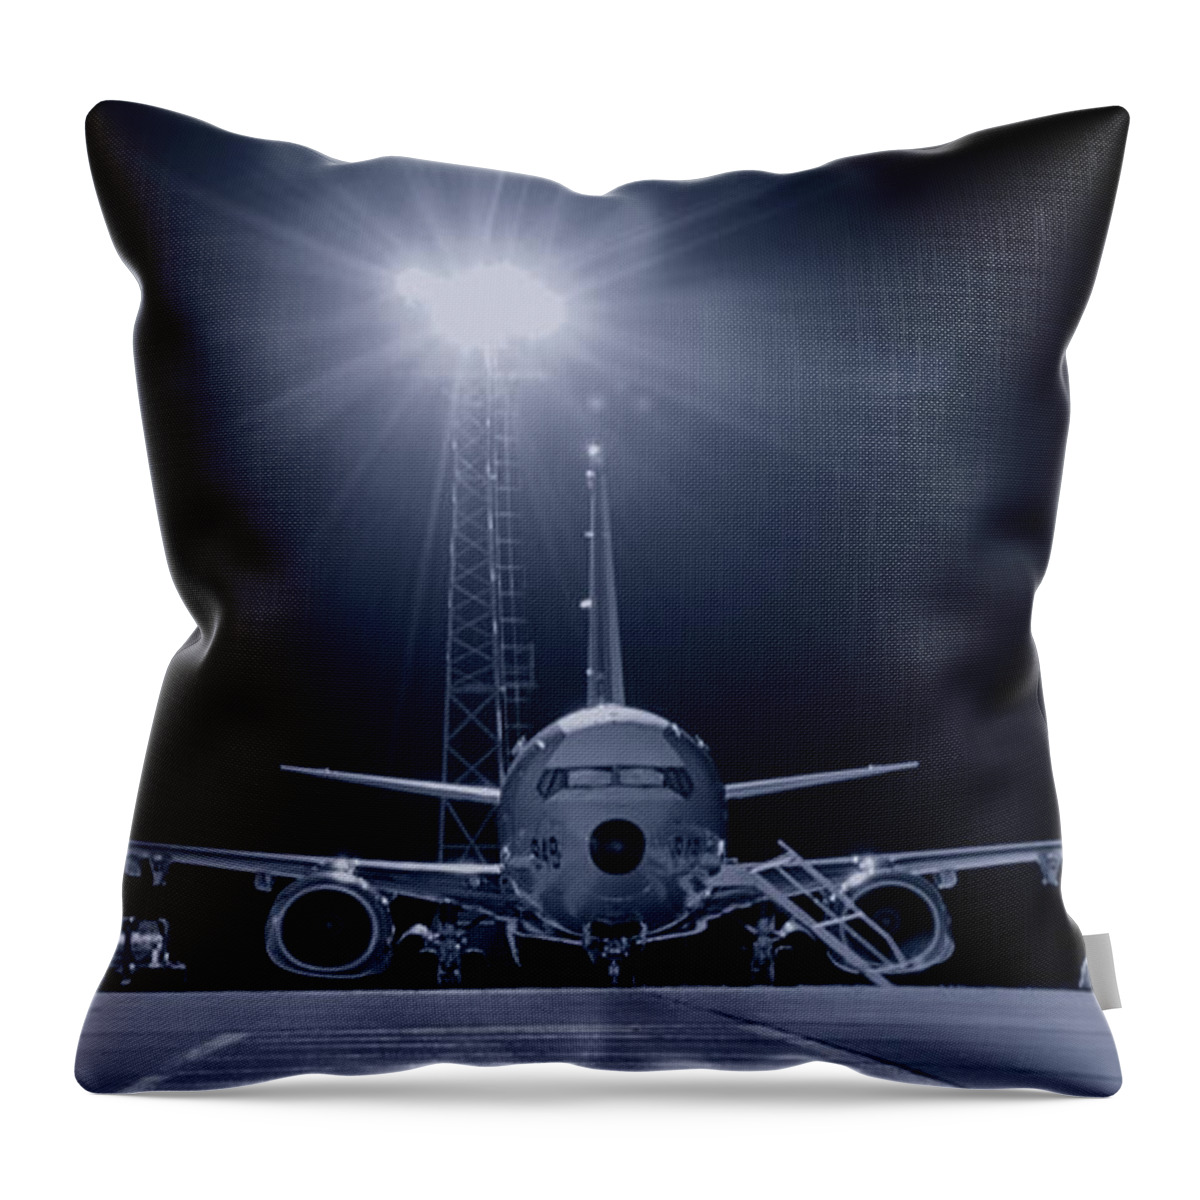 P-8 Poseidon Throw Pillow featuring the photograph Poseidon Waits by Airpower Art